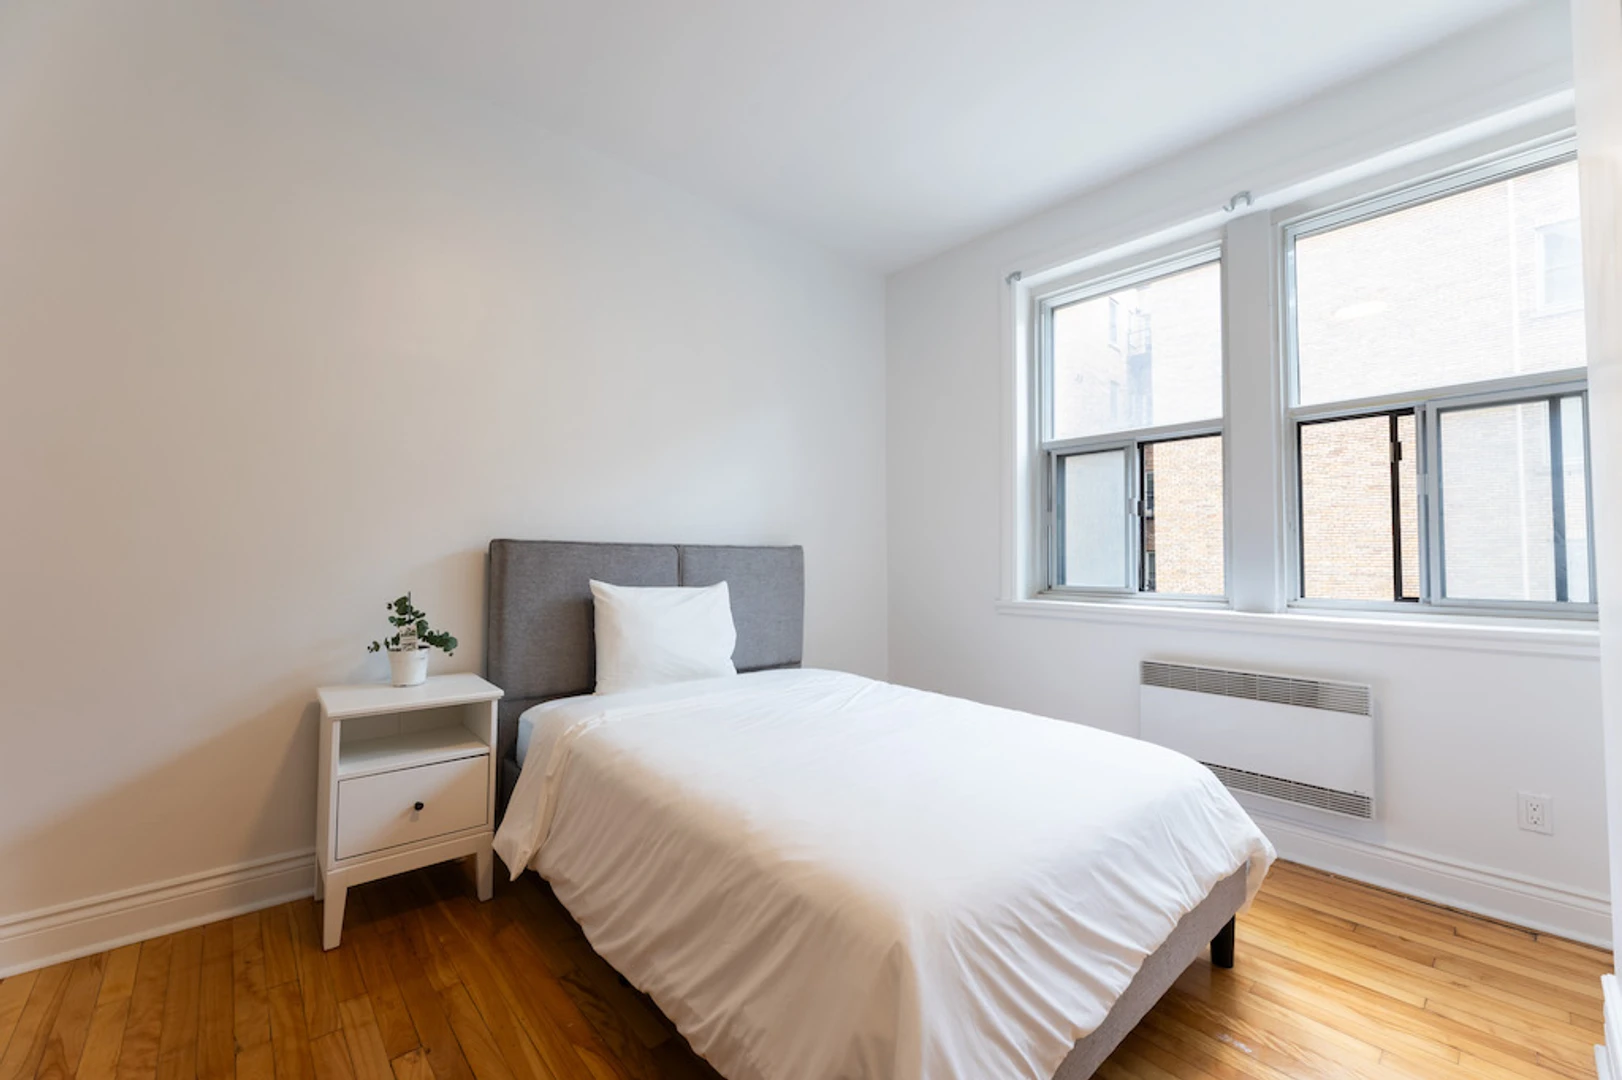 Alquiler de habitación en piso compartido en Montréal